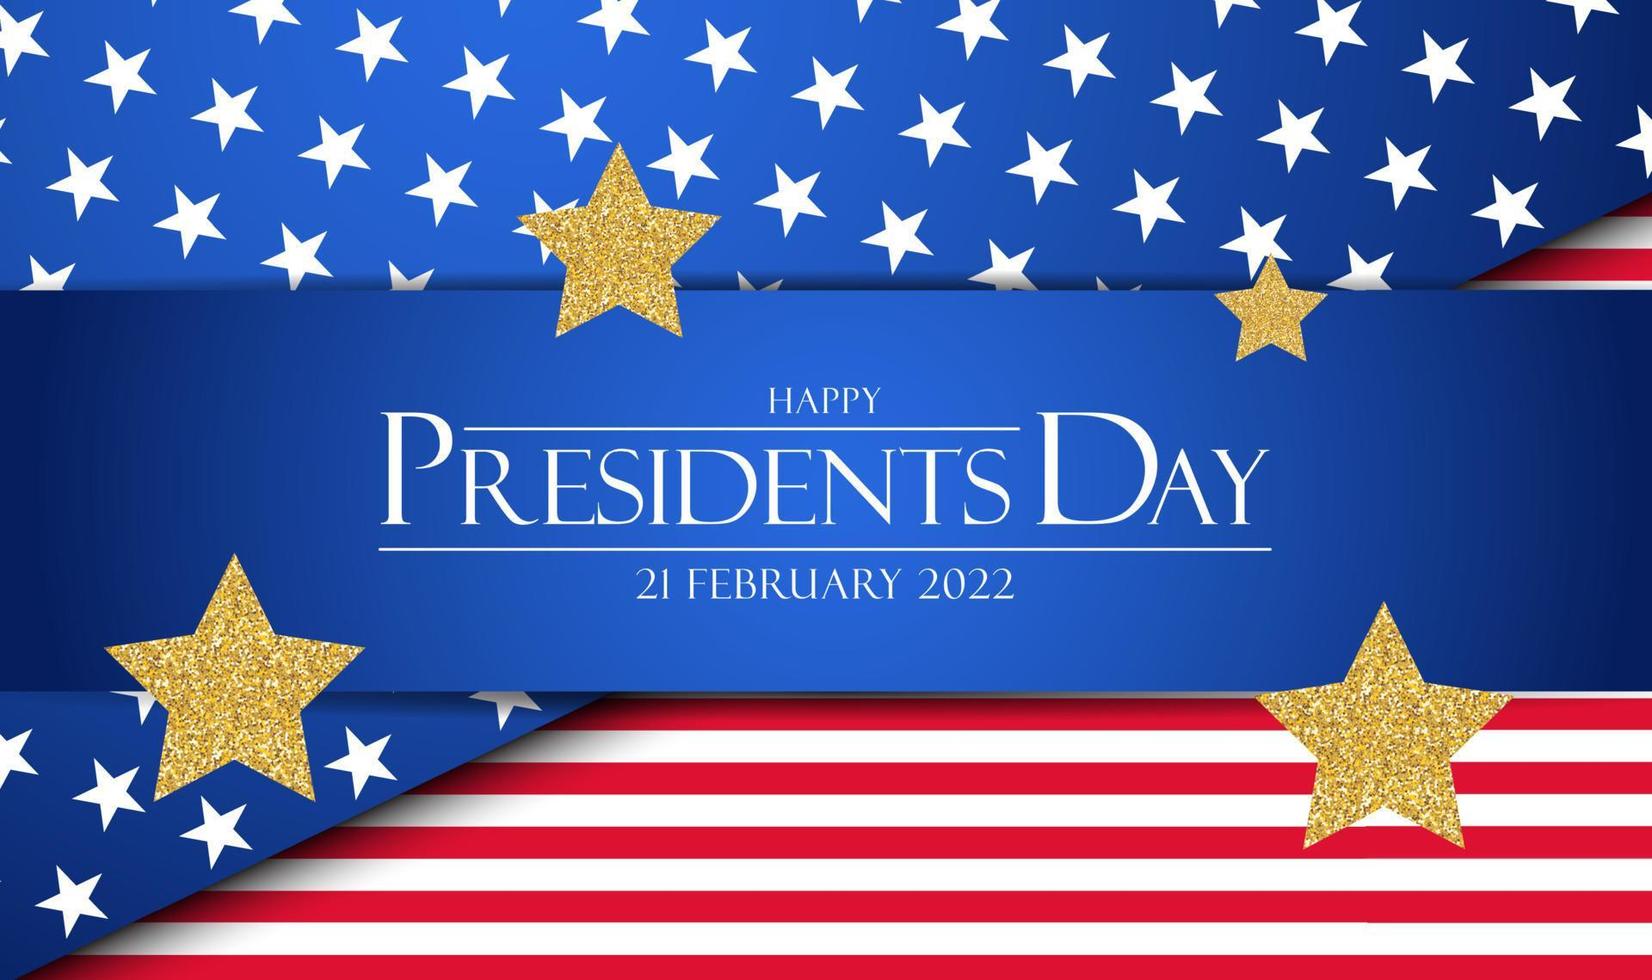 USA President Day Party Holiday Background. Vector Illustartion EPS10